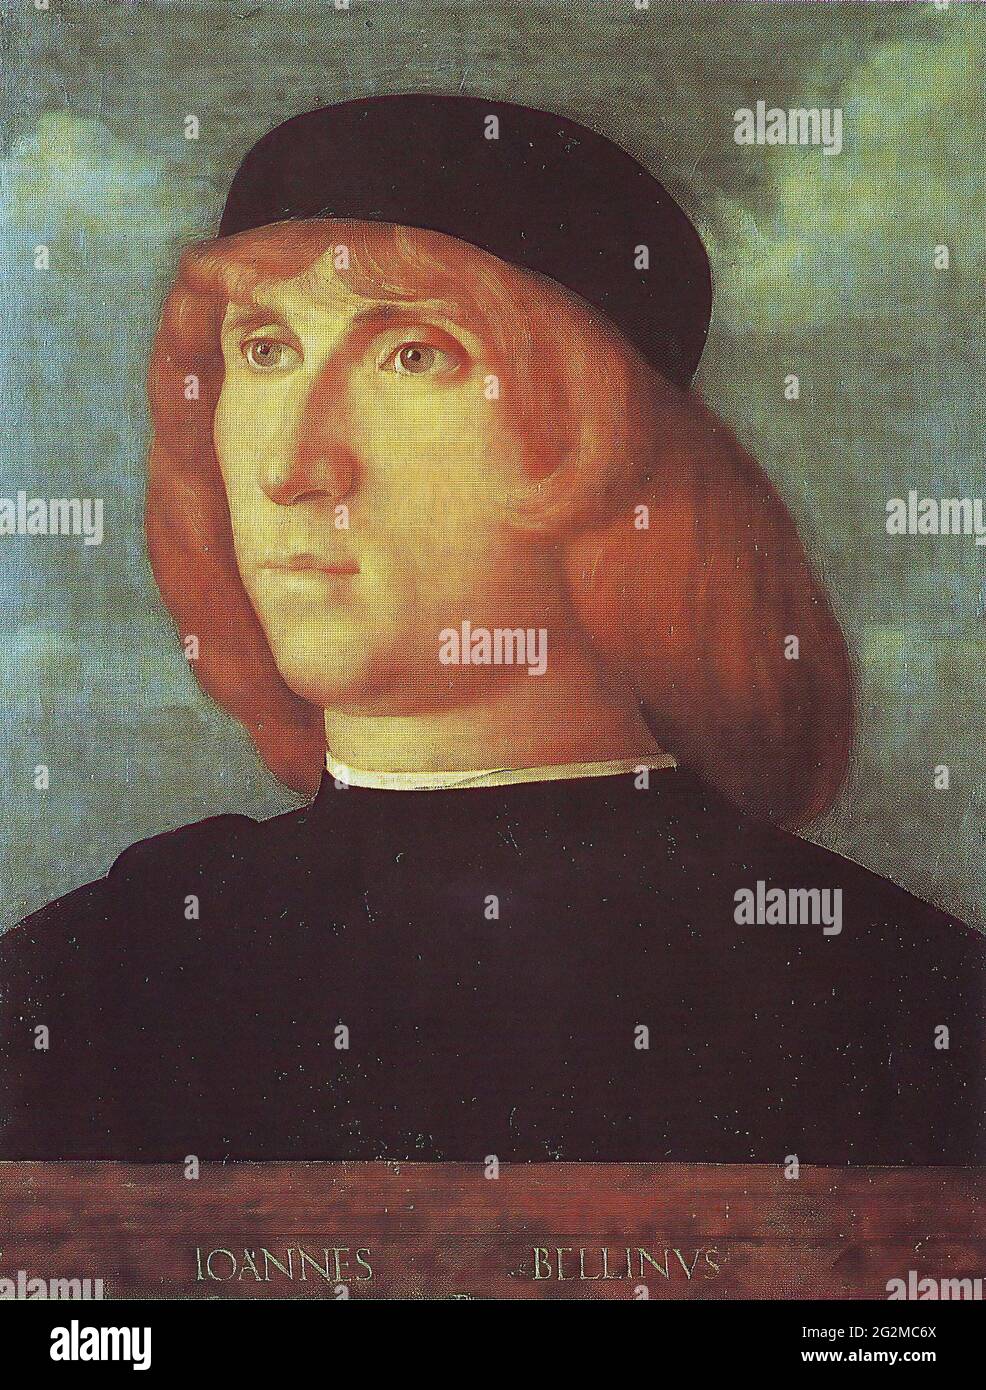 Giovanni Bellini - Self Portrait 1500 Stock Photo - Alamy